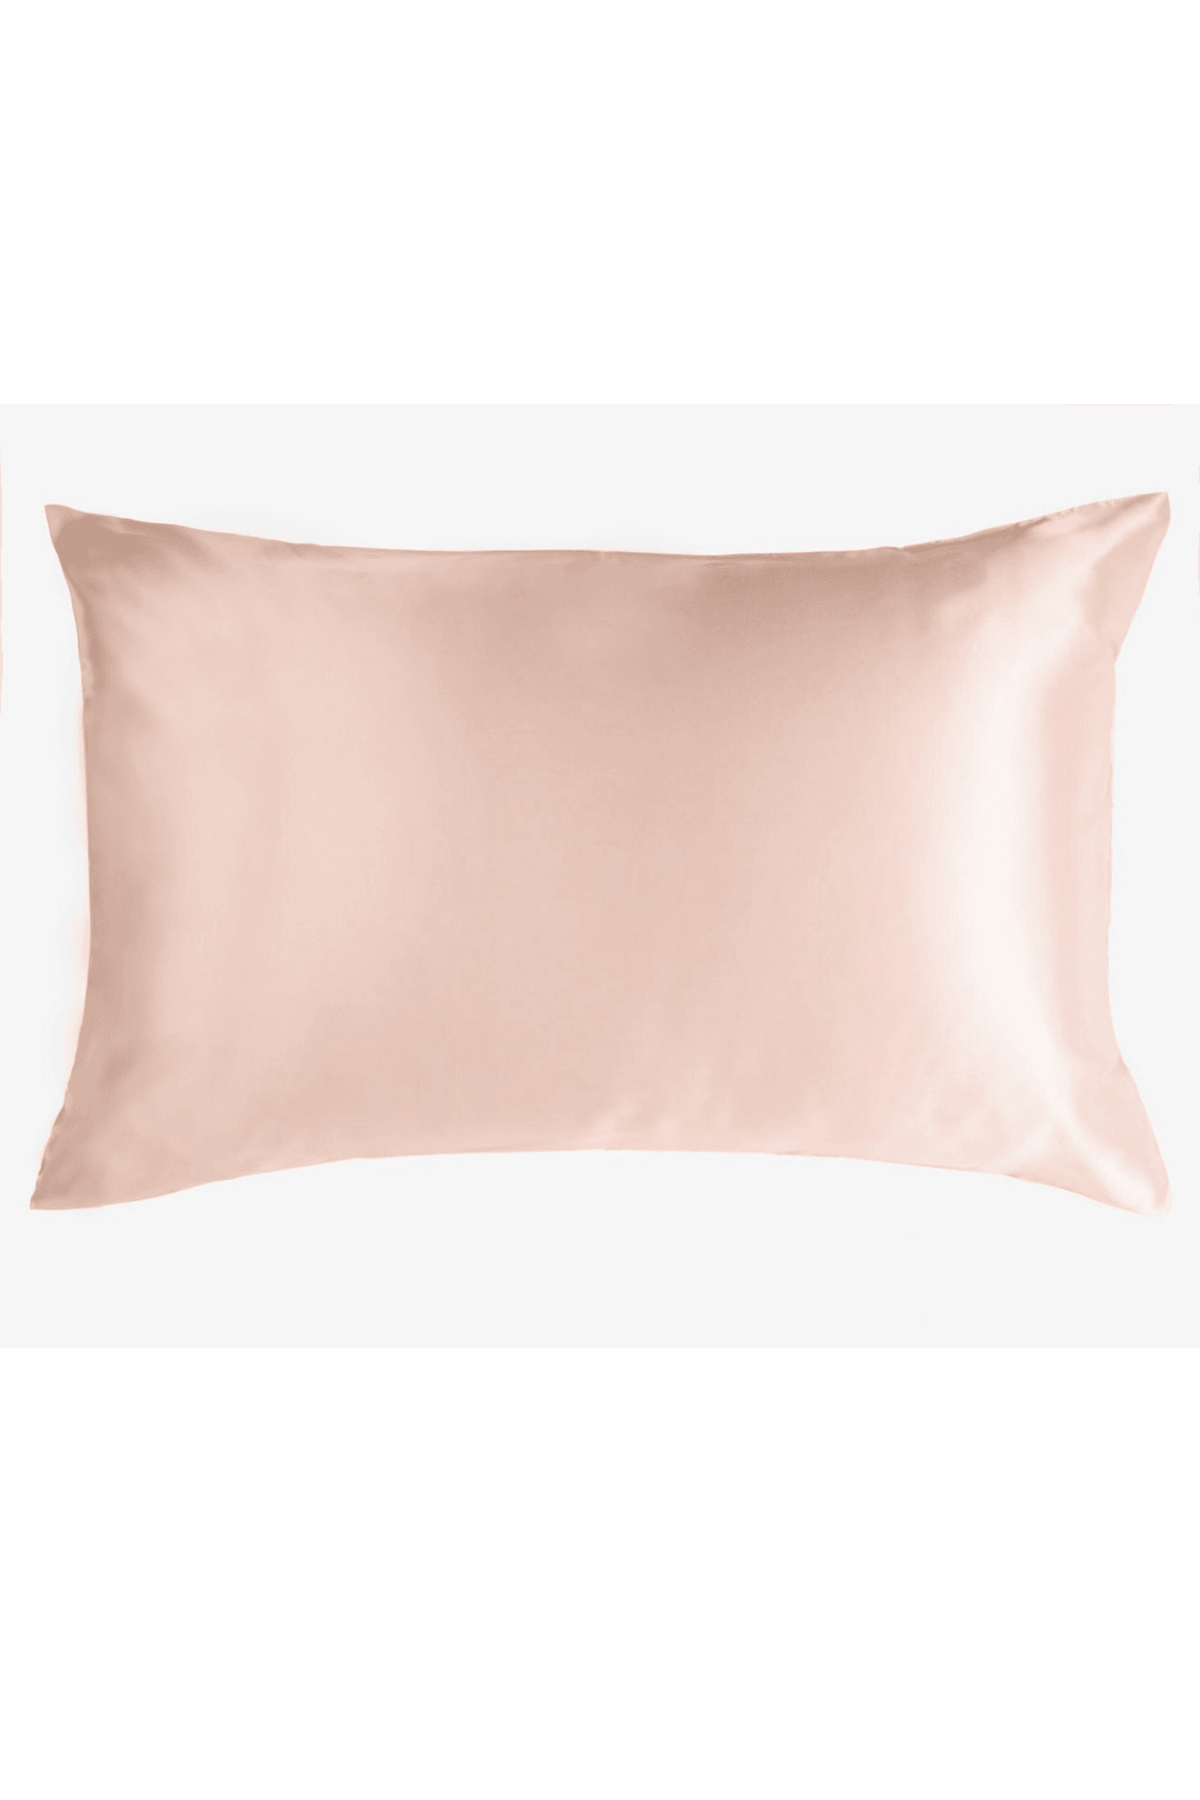 Silk Pillowcase | Powder Pink | 50x70 cm | Nomads Felt